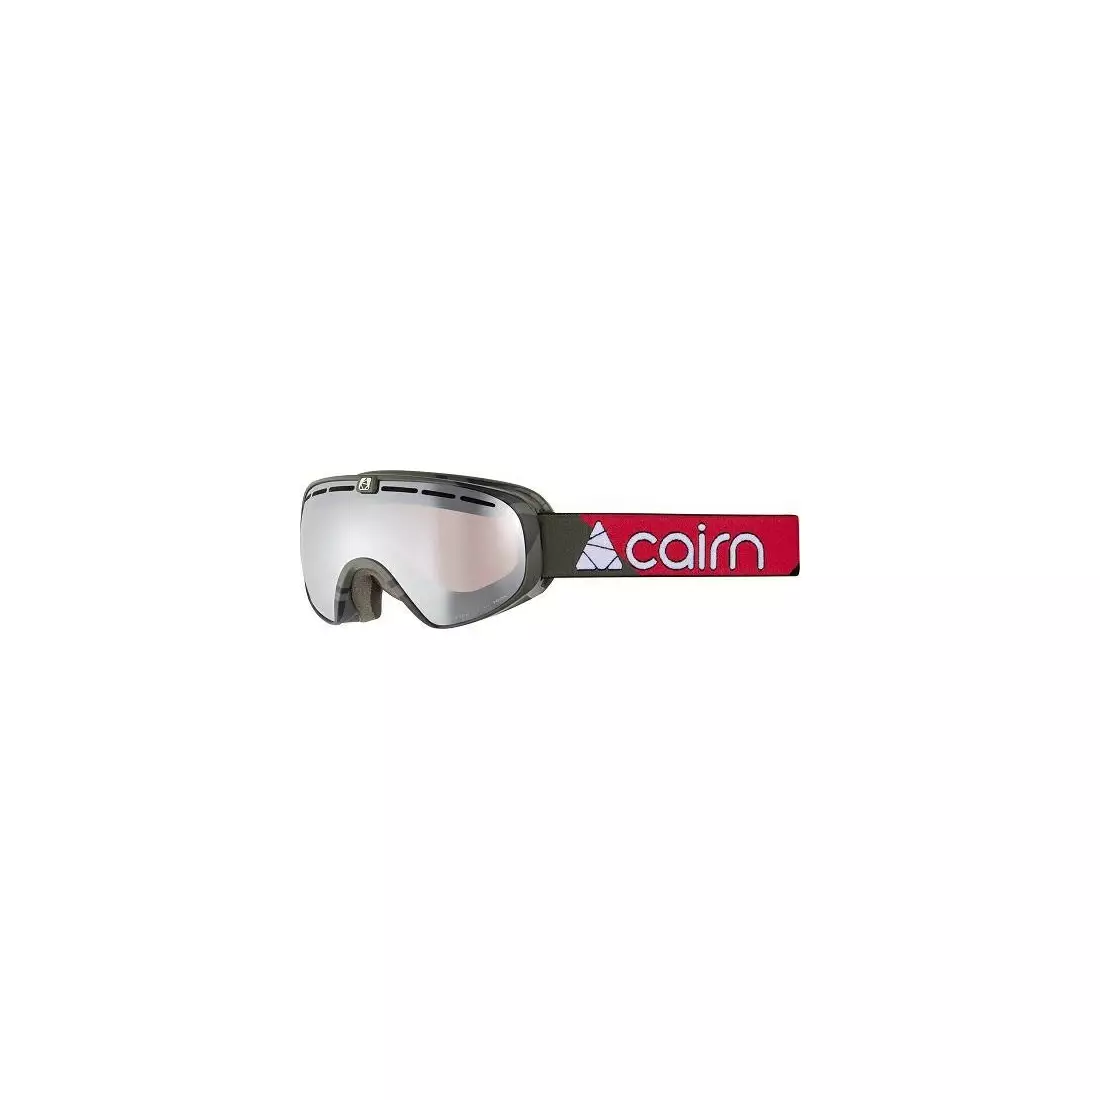 CAIRN ski/snowboard goggles SPOT OTG SPX3000 Black Red Racing 